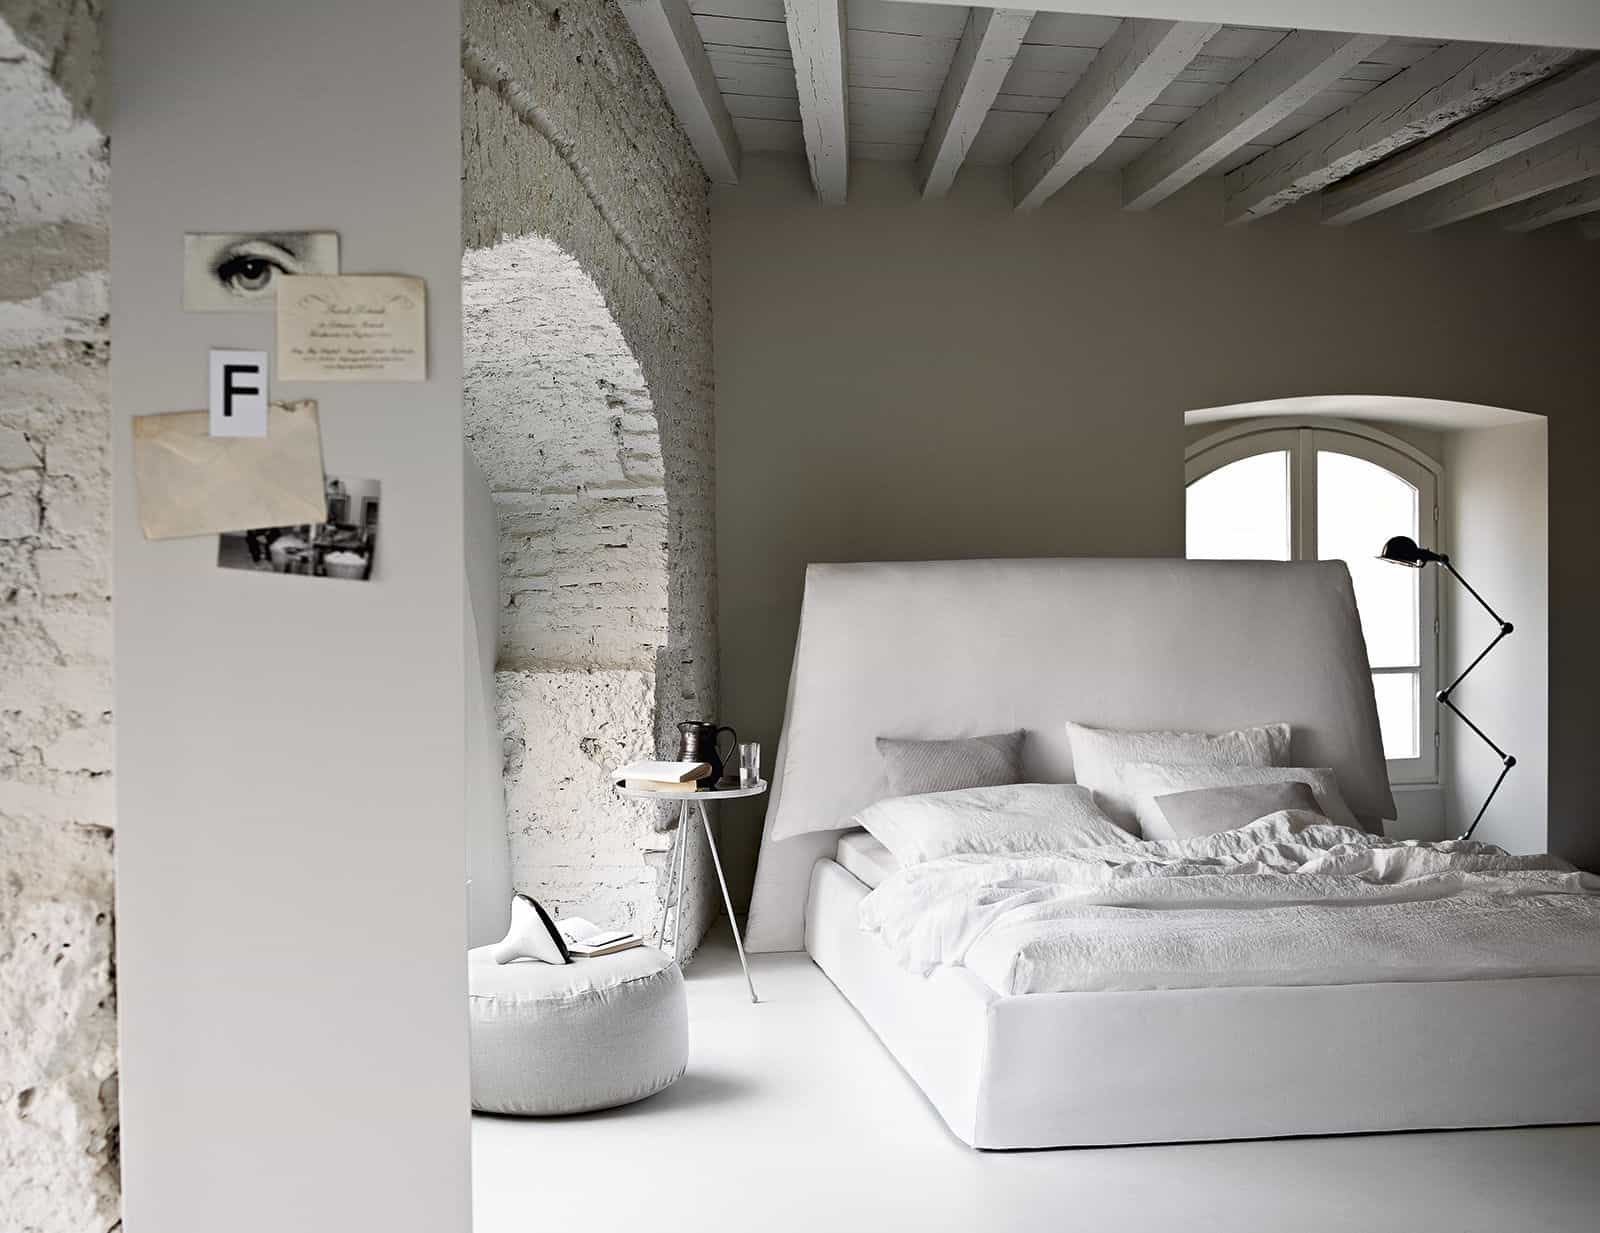 country-bedroom-with-exposed-brick-beams-costanza-135-ivano-redaelli.jpg